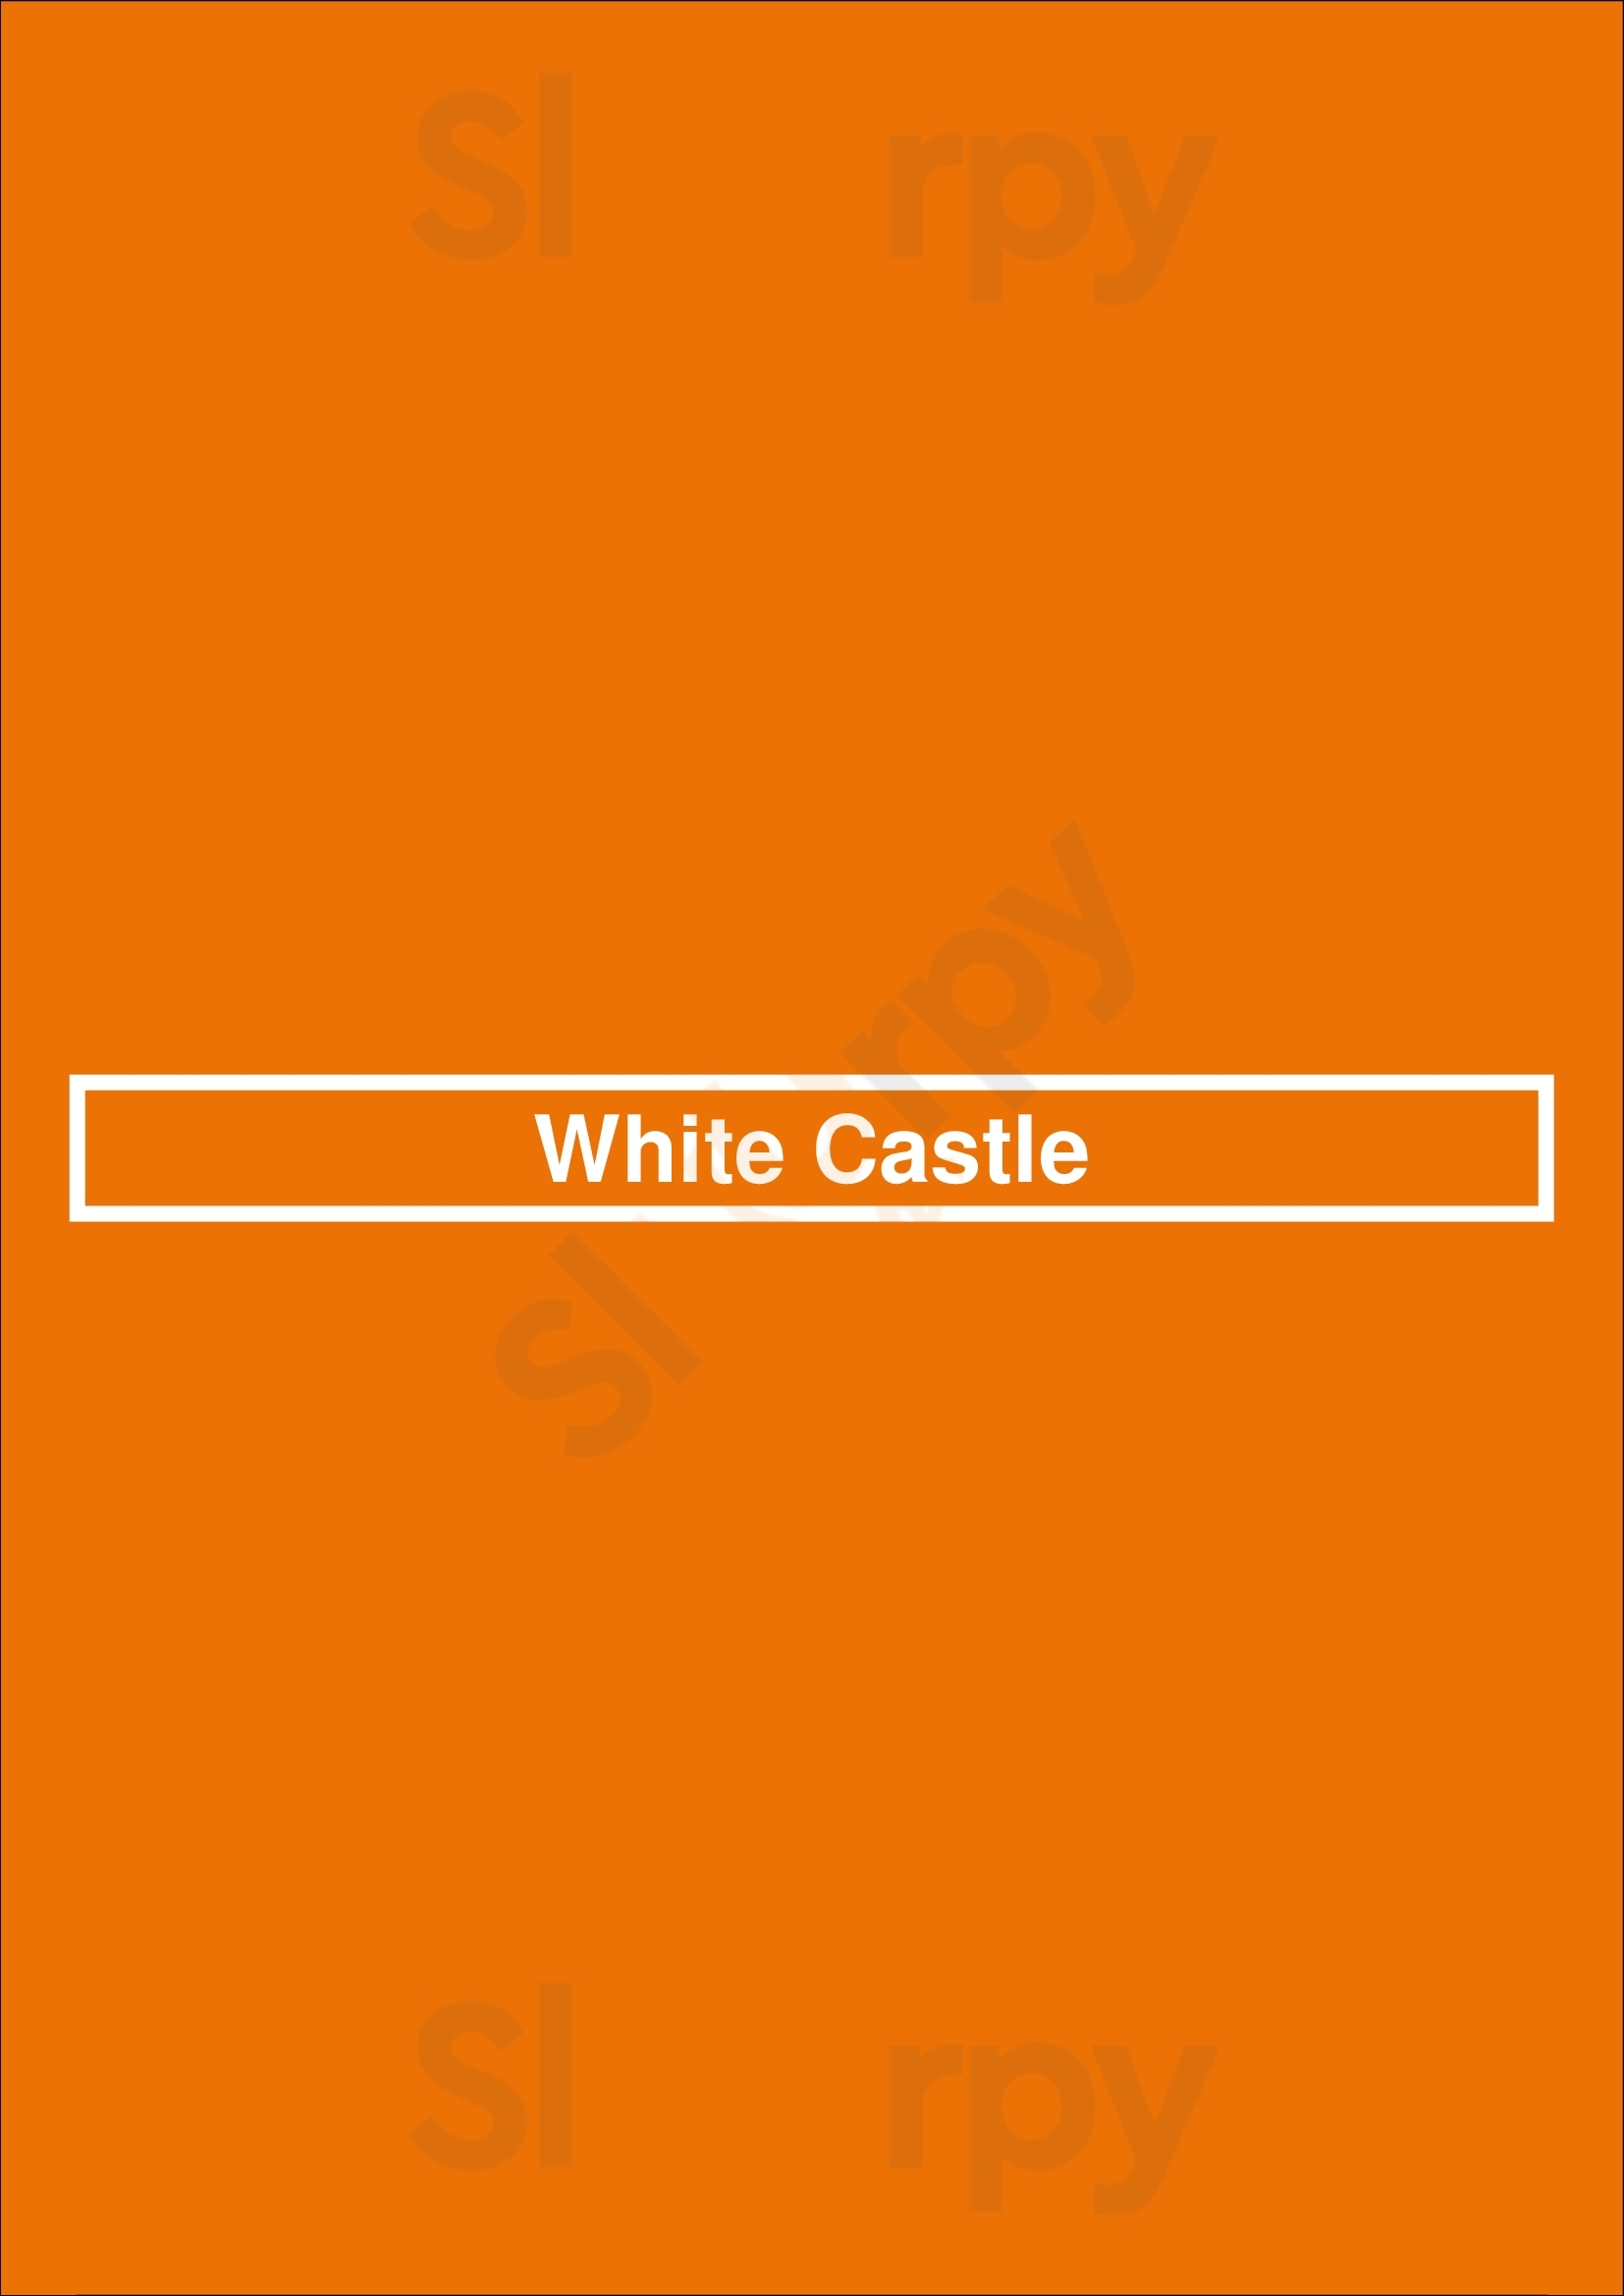 White Castle Nashville Menu - 1